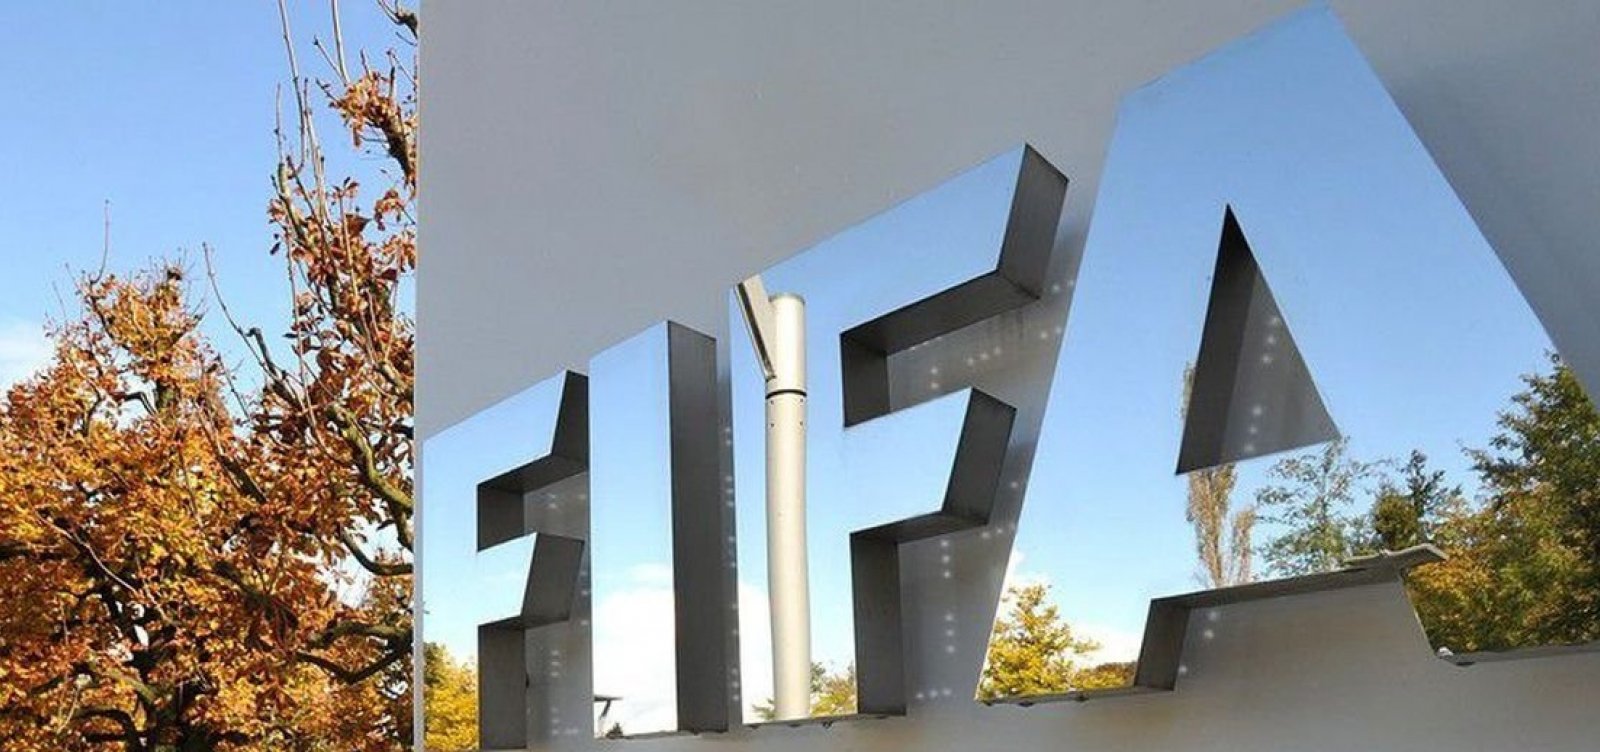 Fifa promoverá jogo para levantar recursos para combater Covid-19